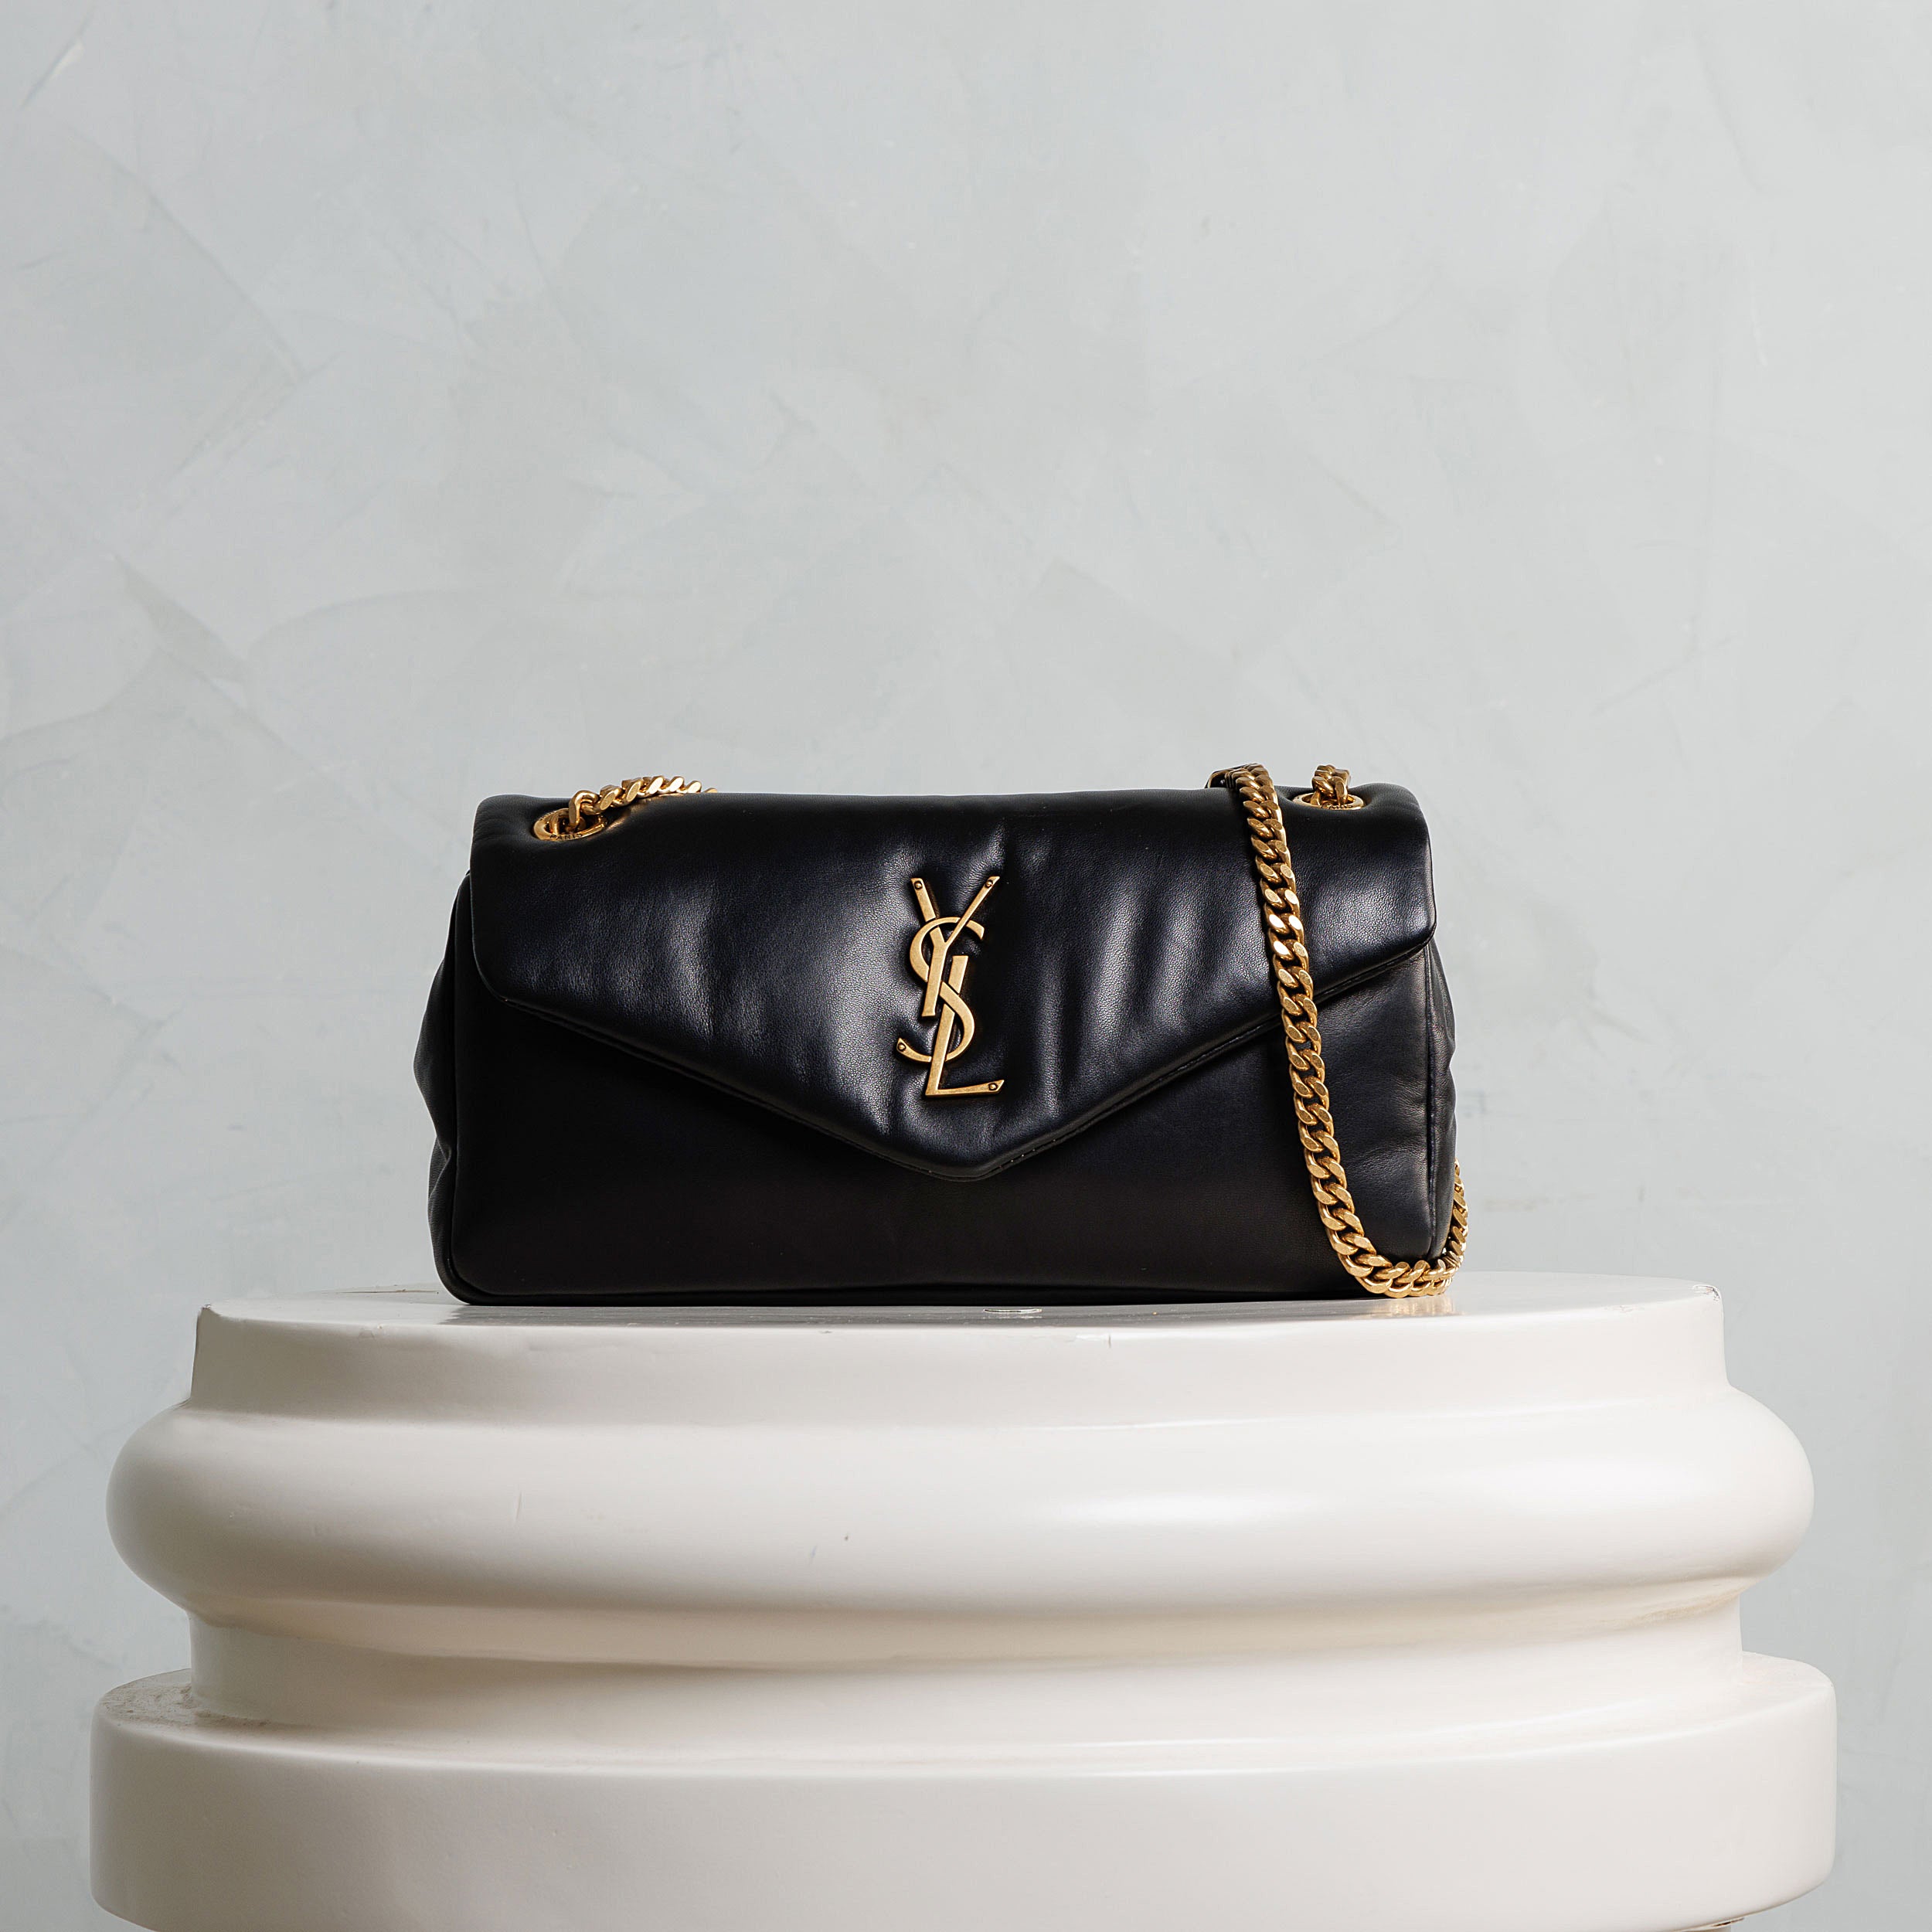 Saint Laurent Loulou Toy bag for Women - Beige in UAE